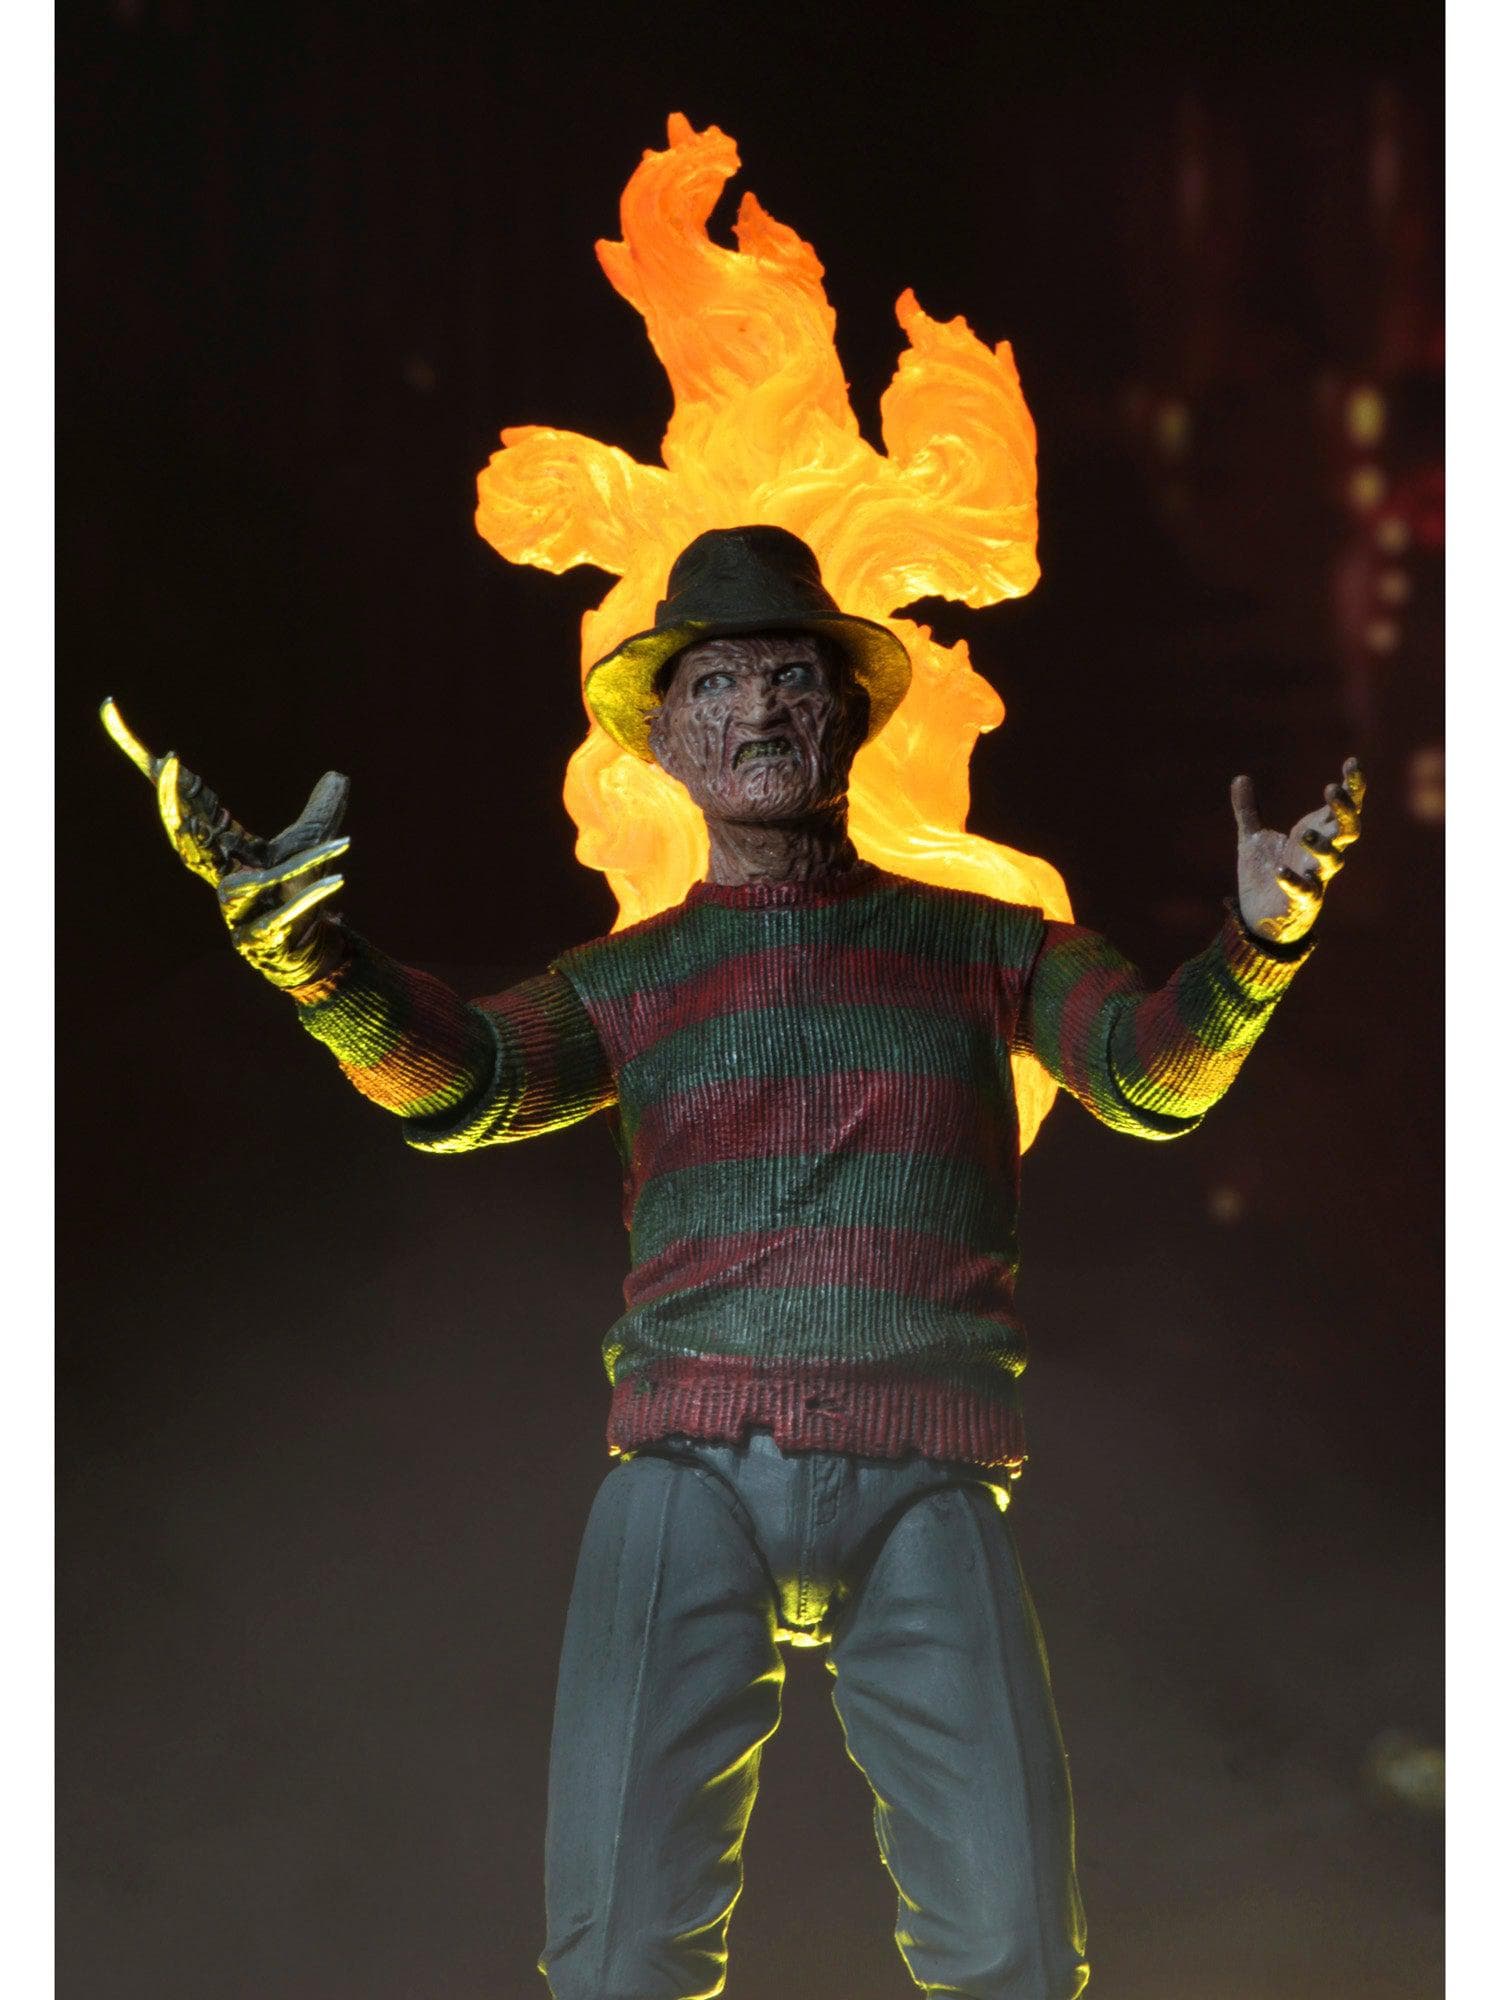 NECA - Nightmare on Elm Street - 7" Scale Figure - Ultimate Part 2 Freddy - costumes.com